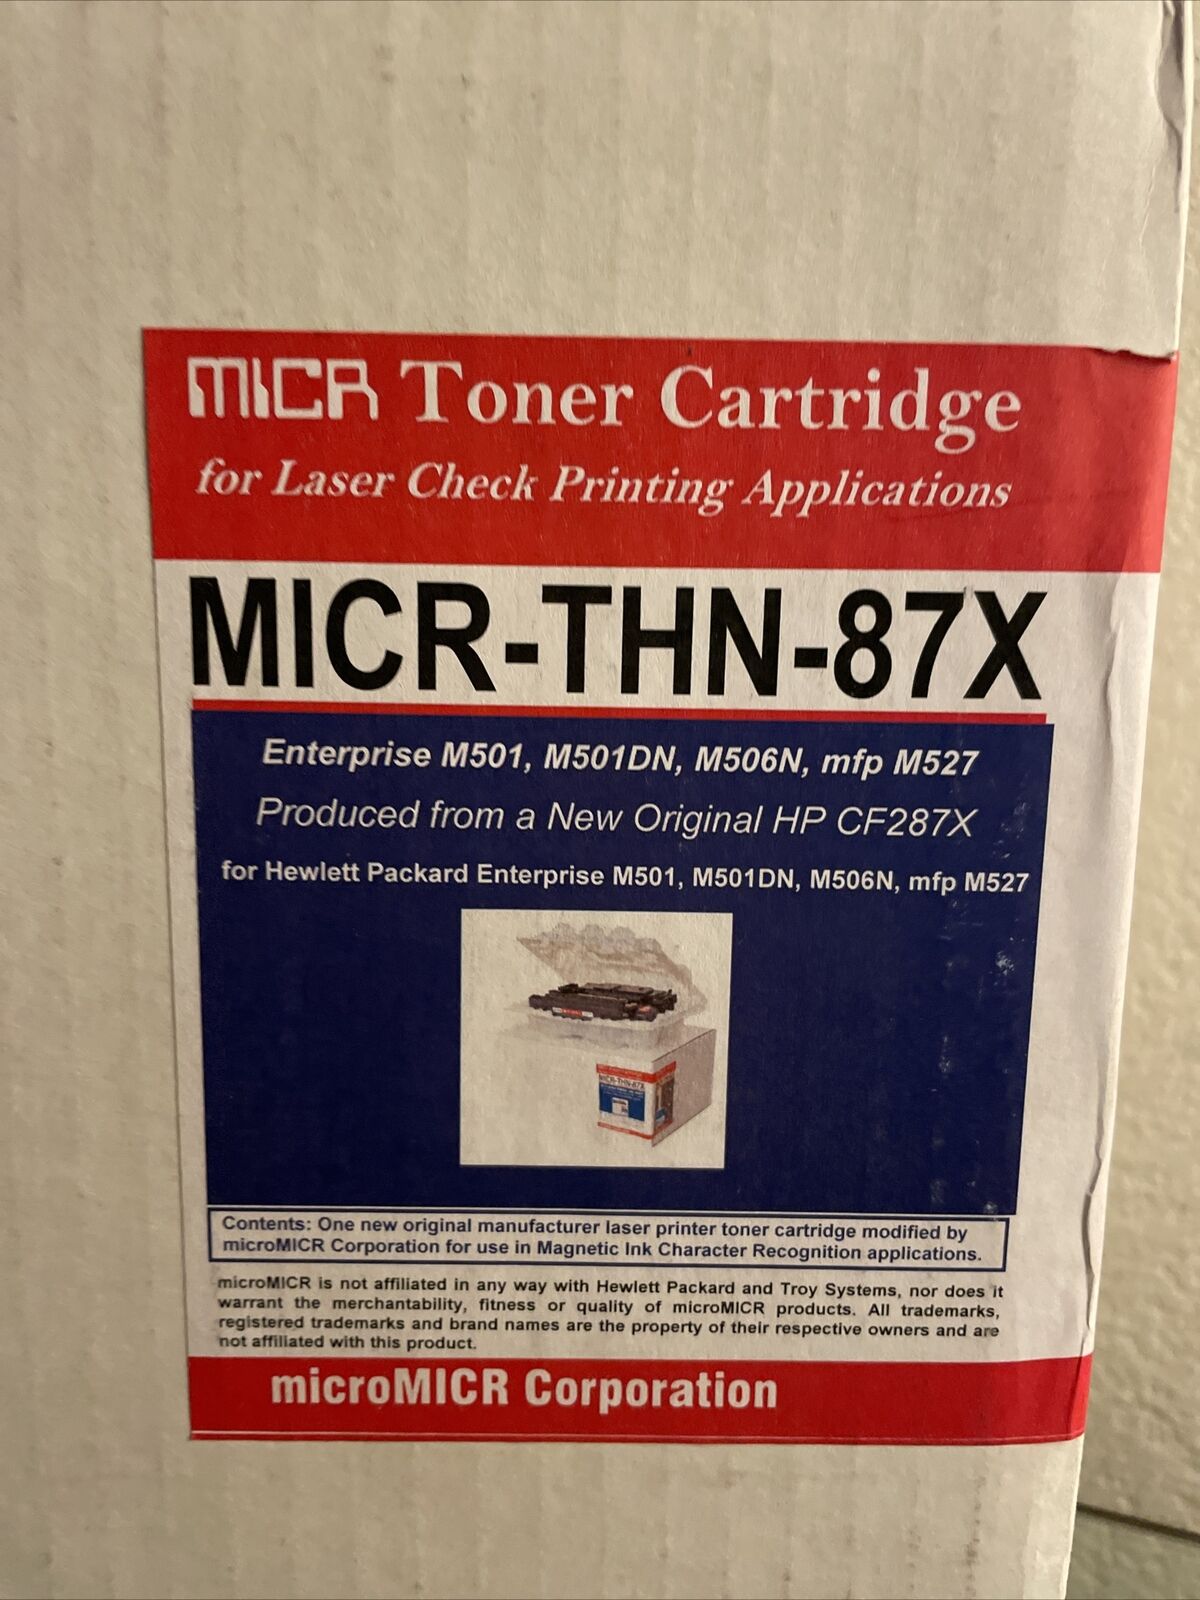 Micromicr Micr Toner Cartridge - Black - Laser - 18000 Page - 1 Each (thn87x)